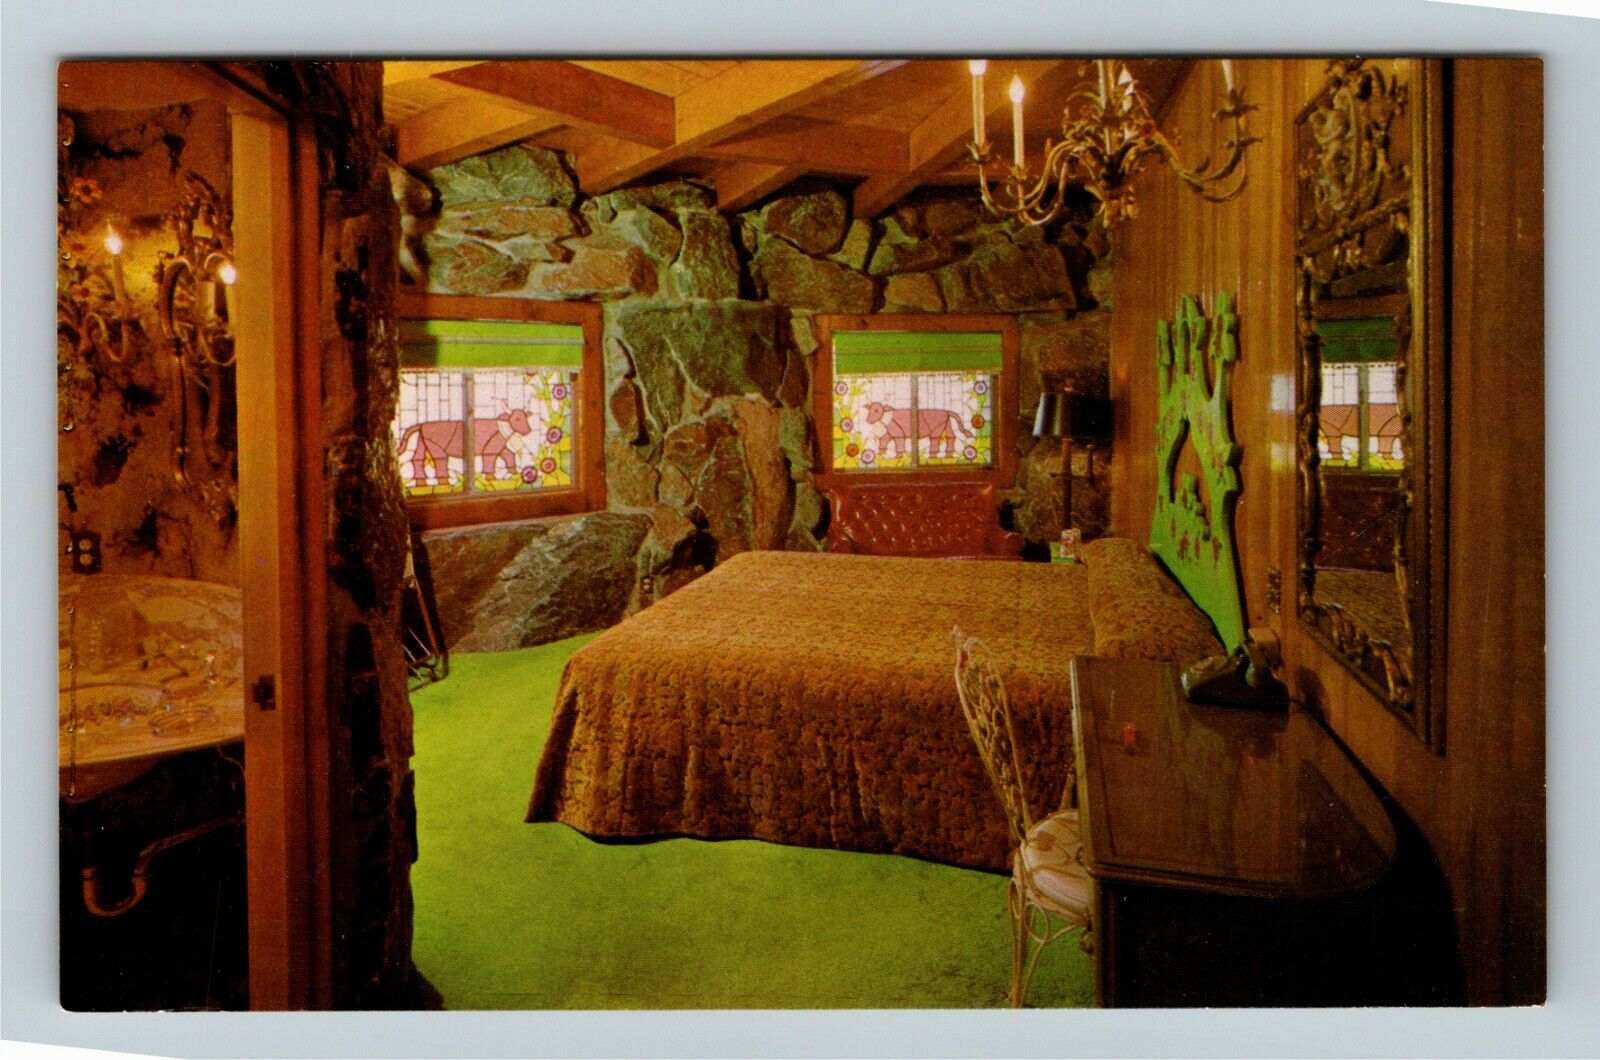 San Luis Obispo CA-California, Madonna Inn, Vintage Postcard